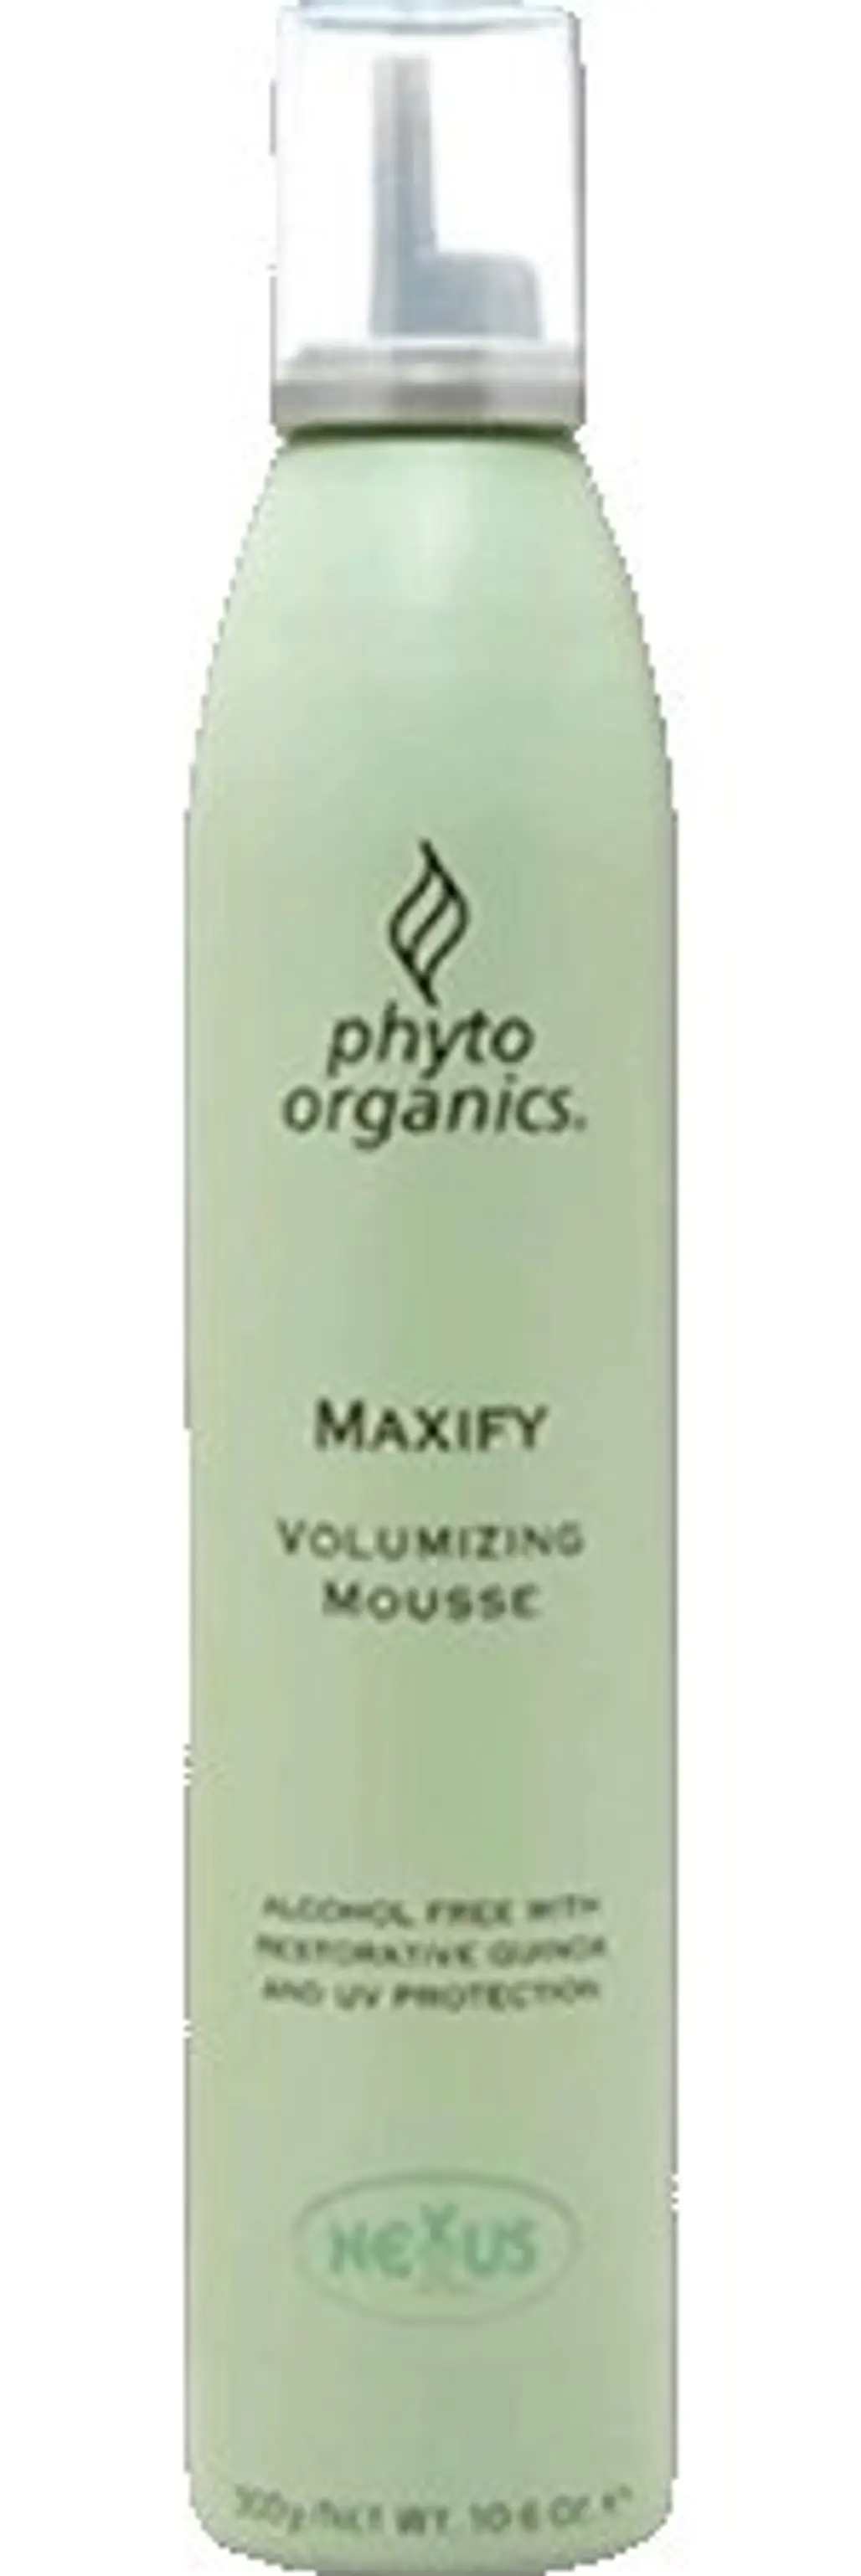 Nexxus Phyto Organics Maxify Volume Mousse